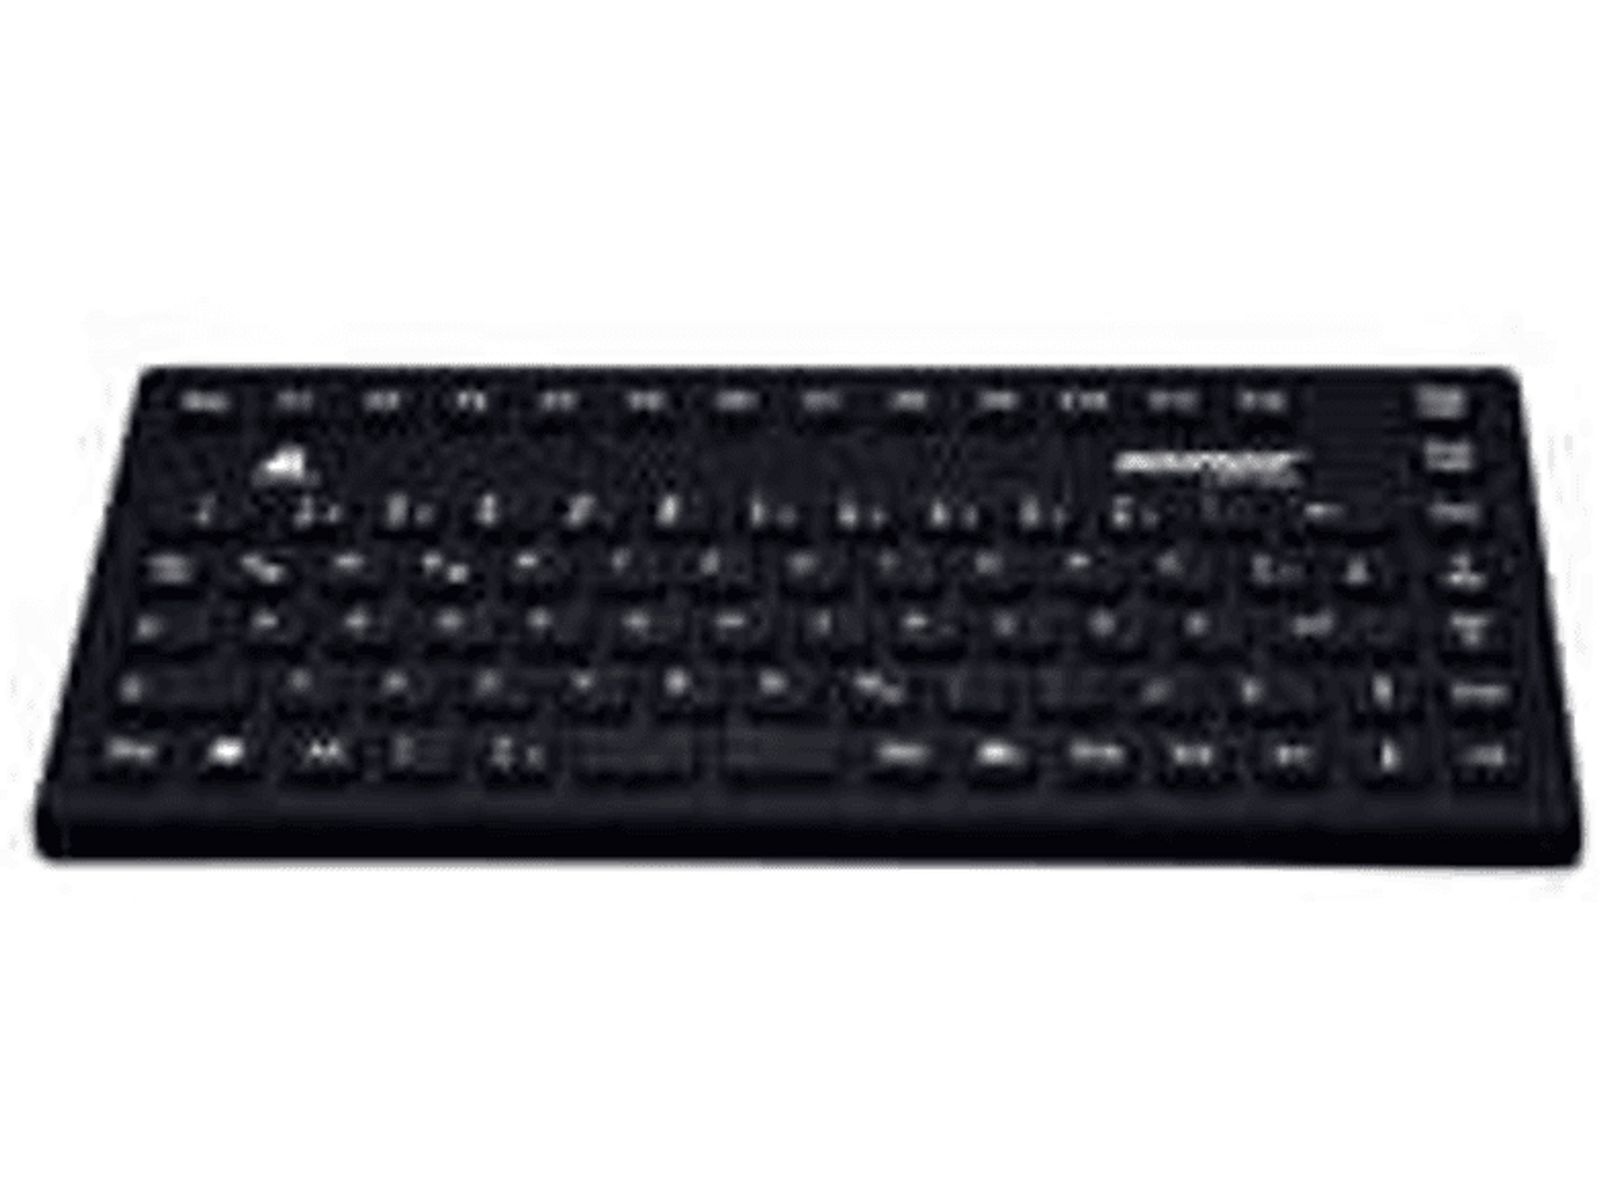 Tastatur KG24204, GE